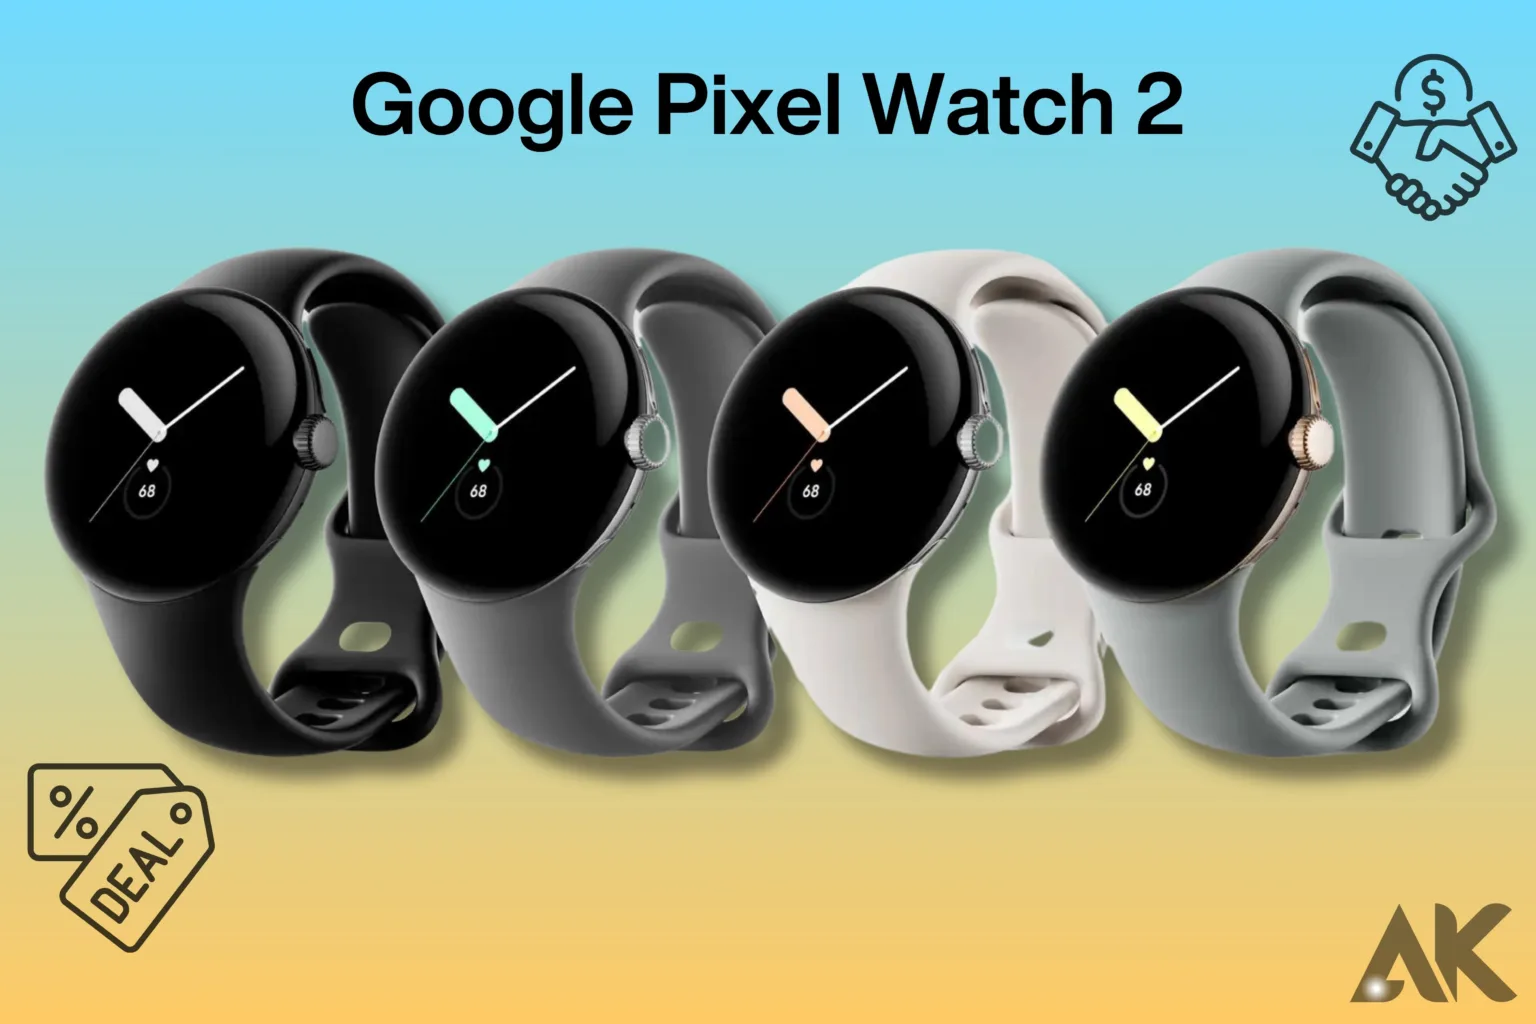 Google Pixel Watch 2 deals